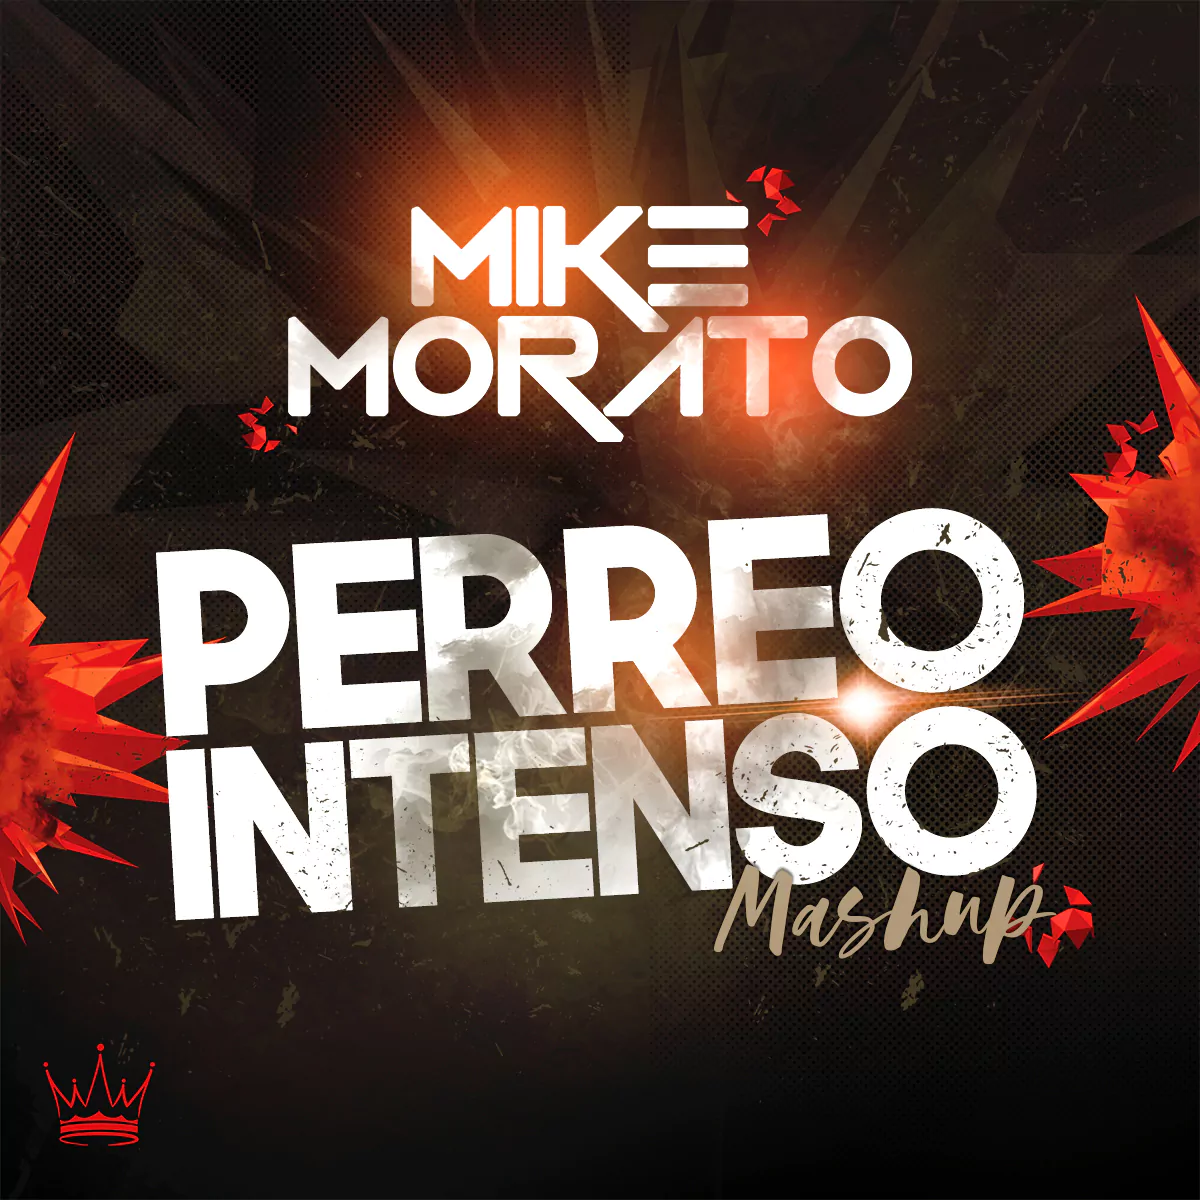 Mike Morato - Perreo Intenso (Mashup)